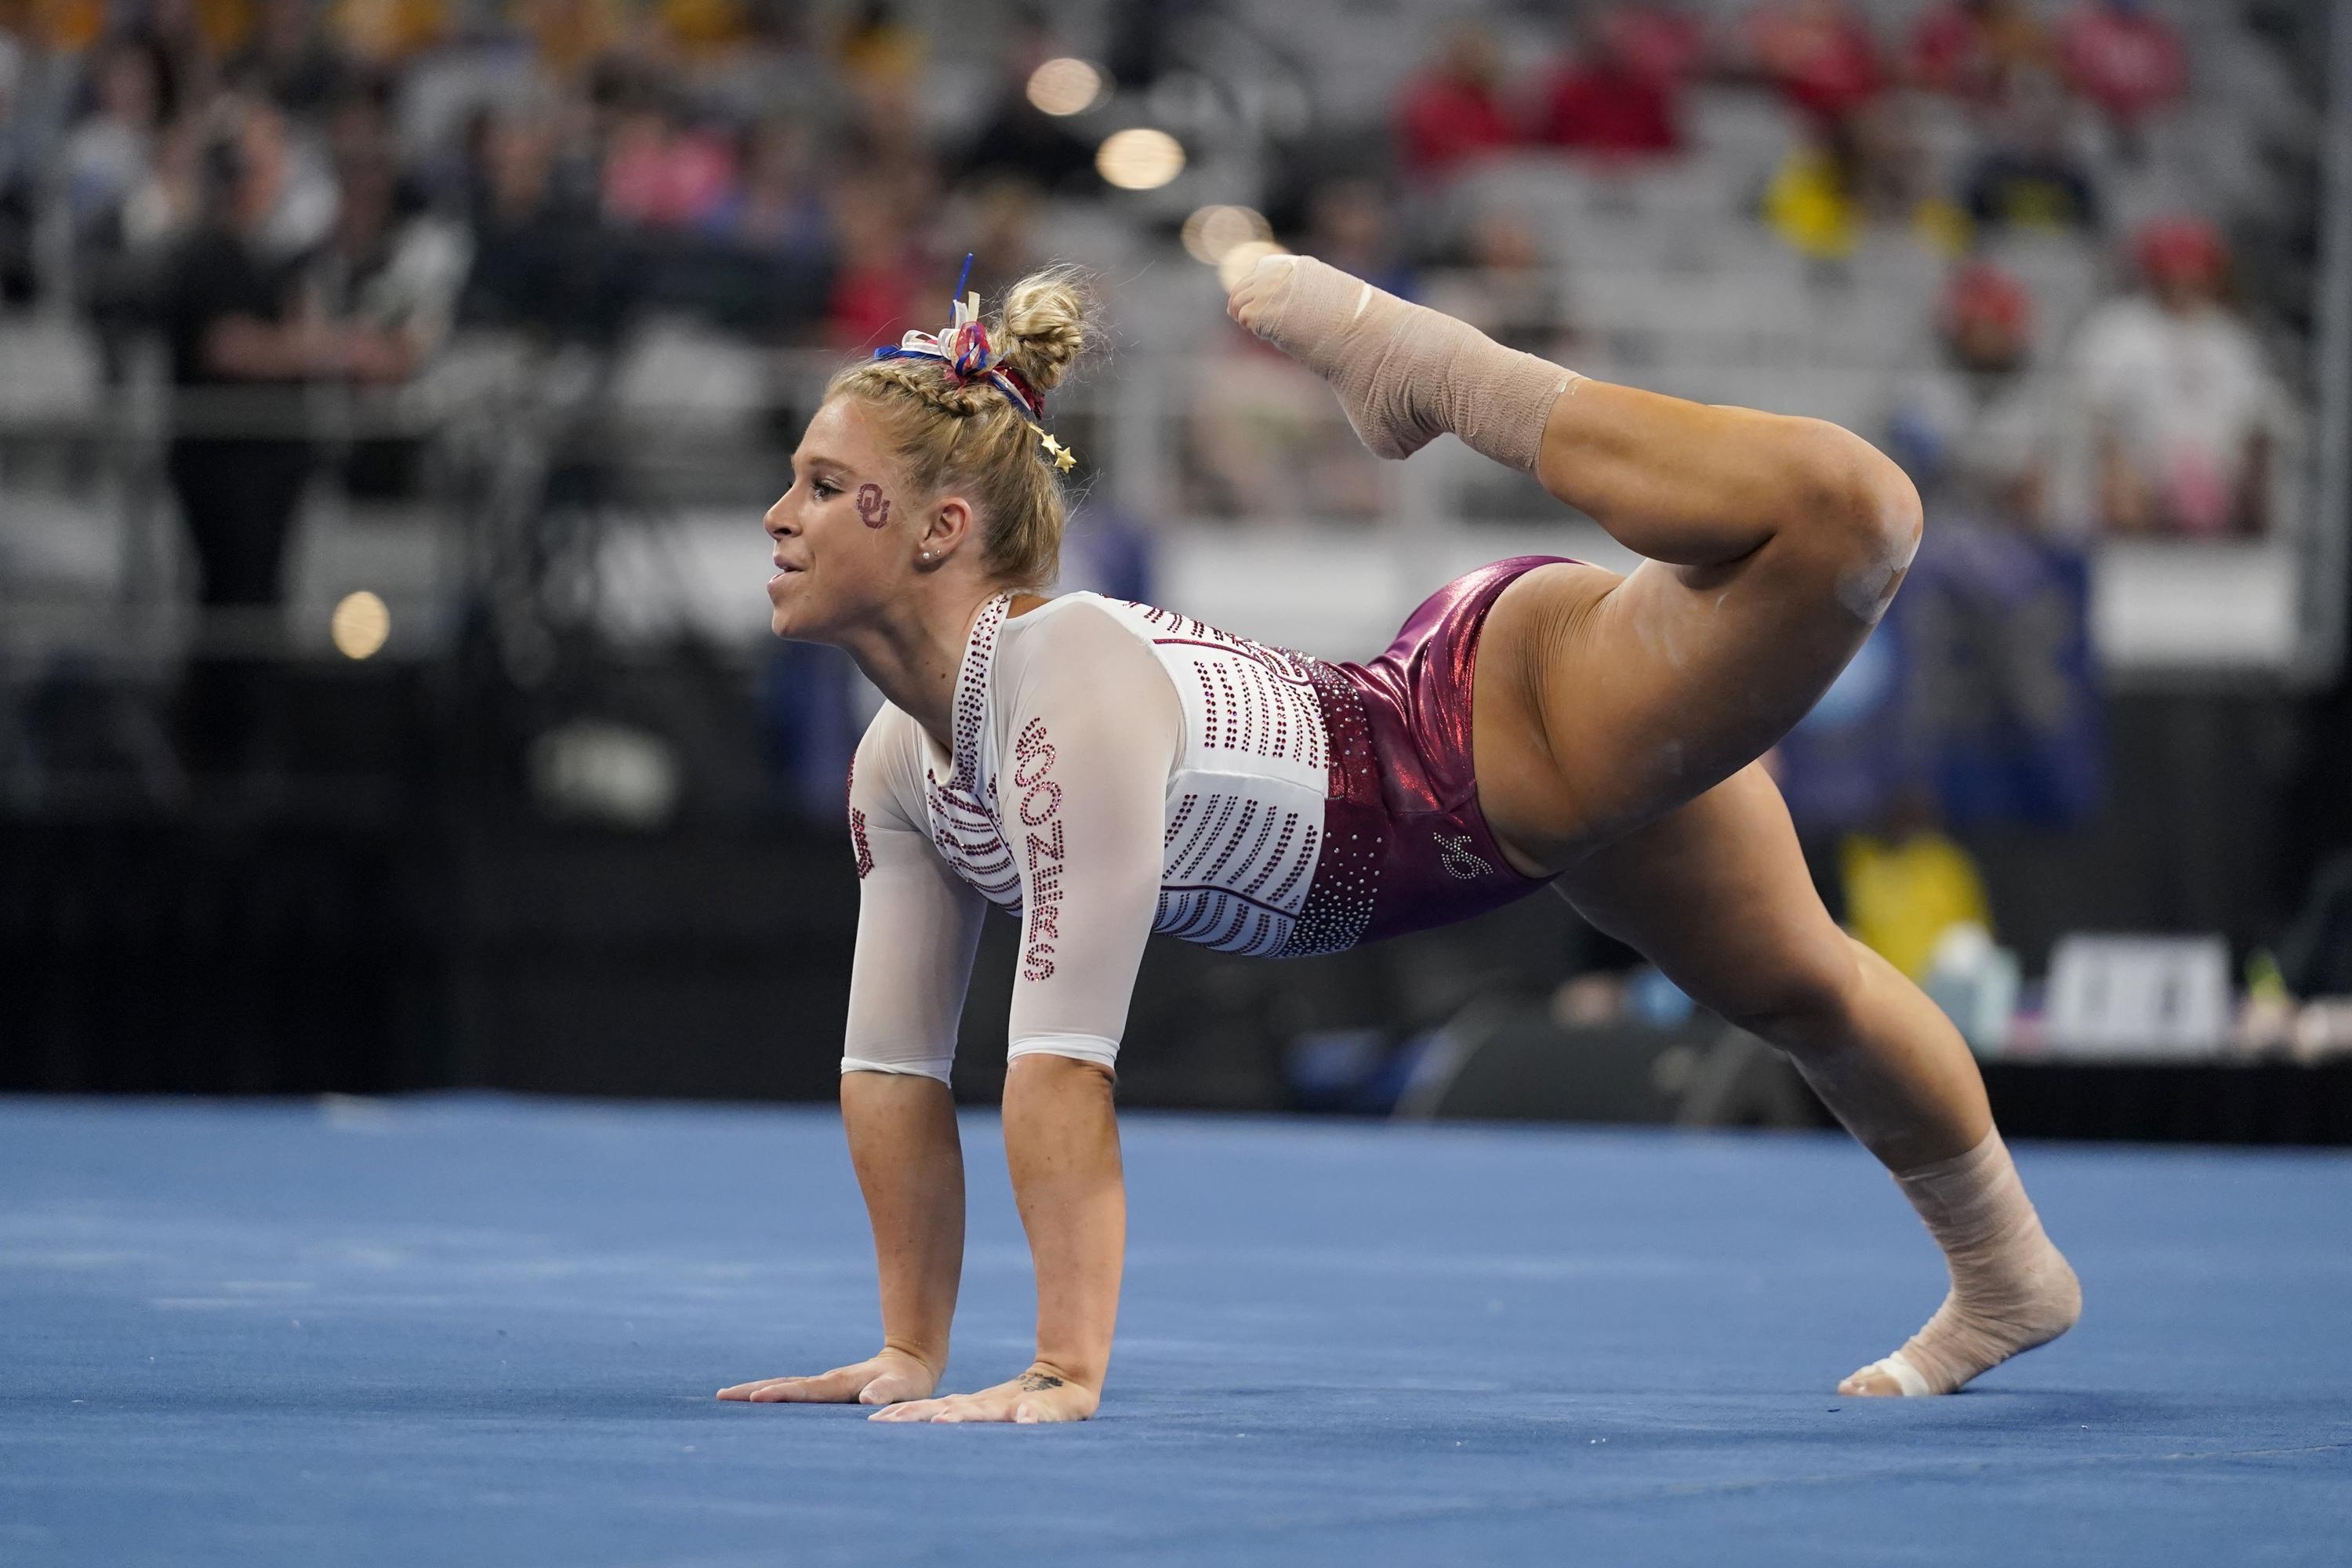 How the NCAA college gymnastics championship works